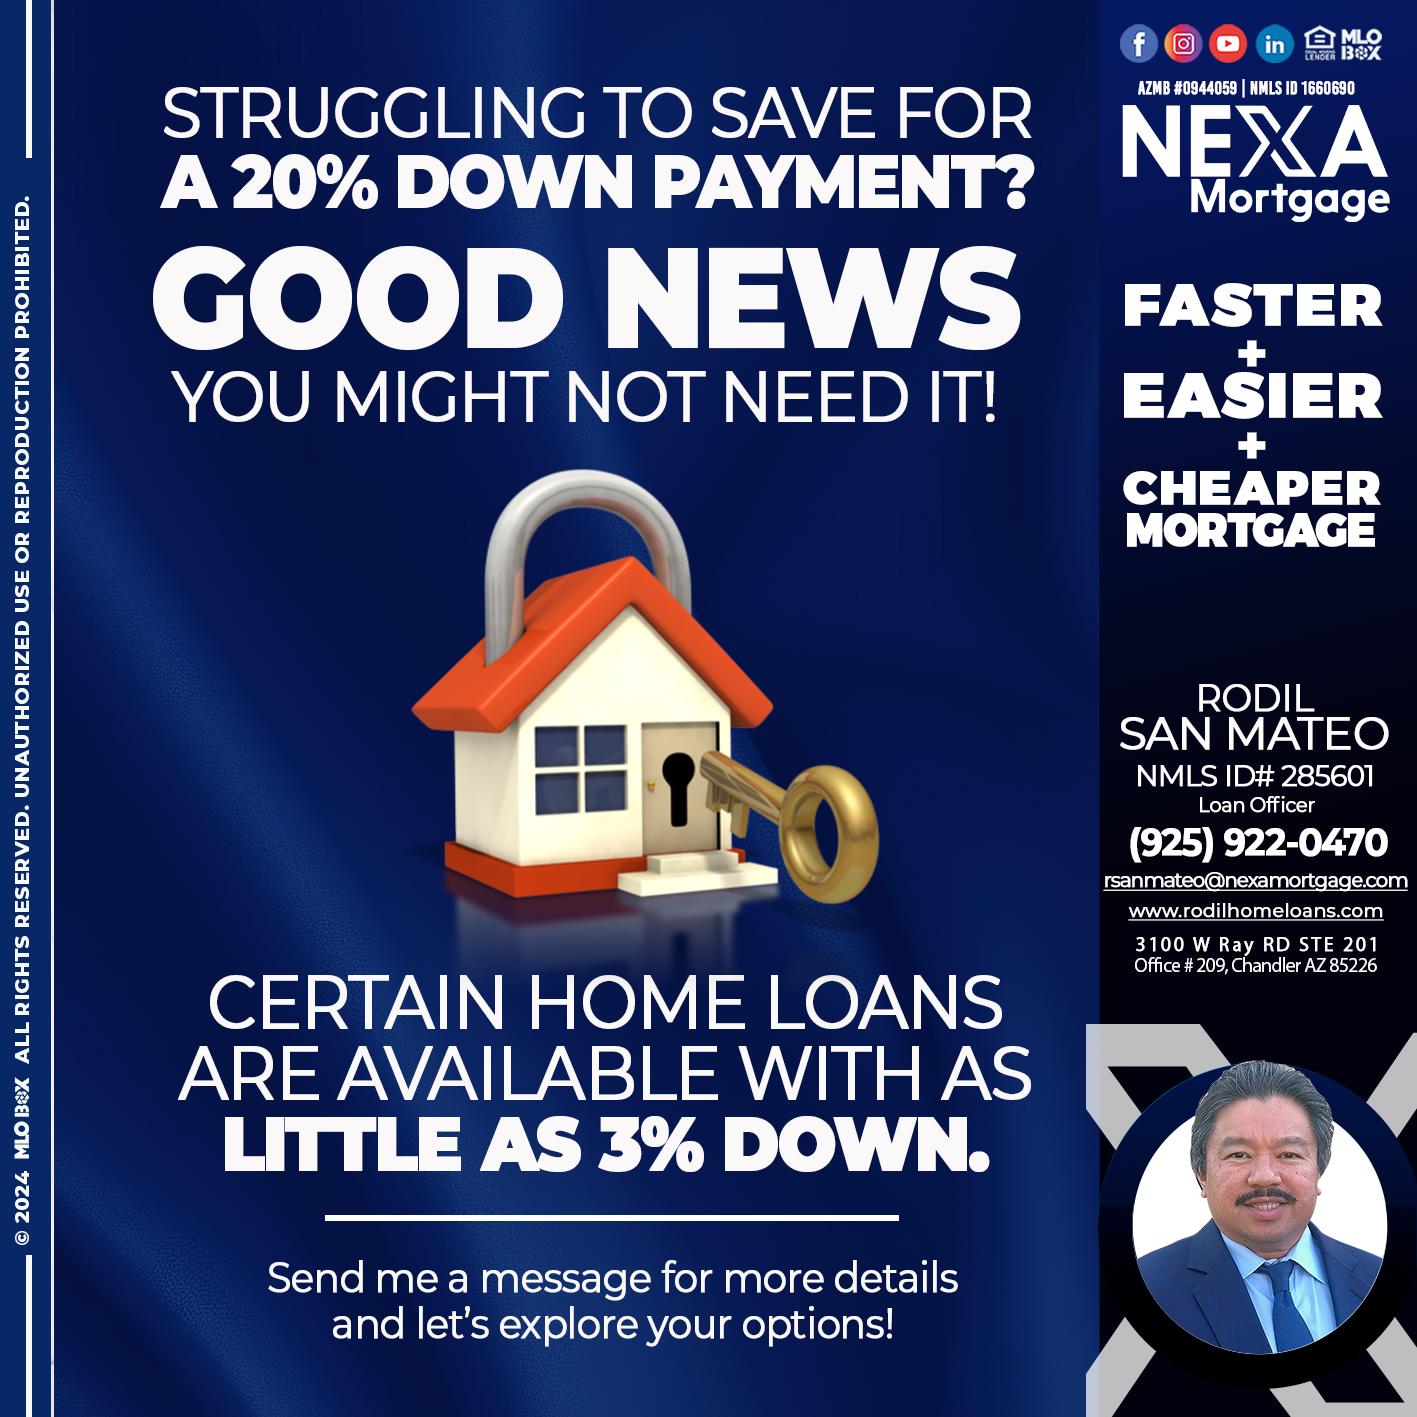 good news - Rodil San Mateo -Loan Officer